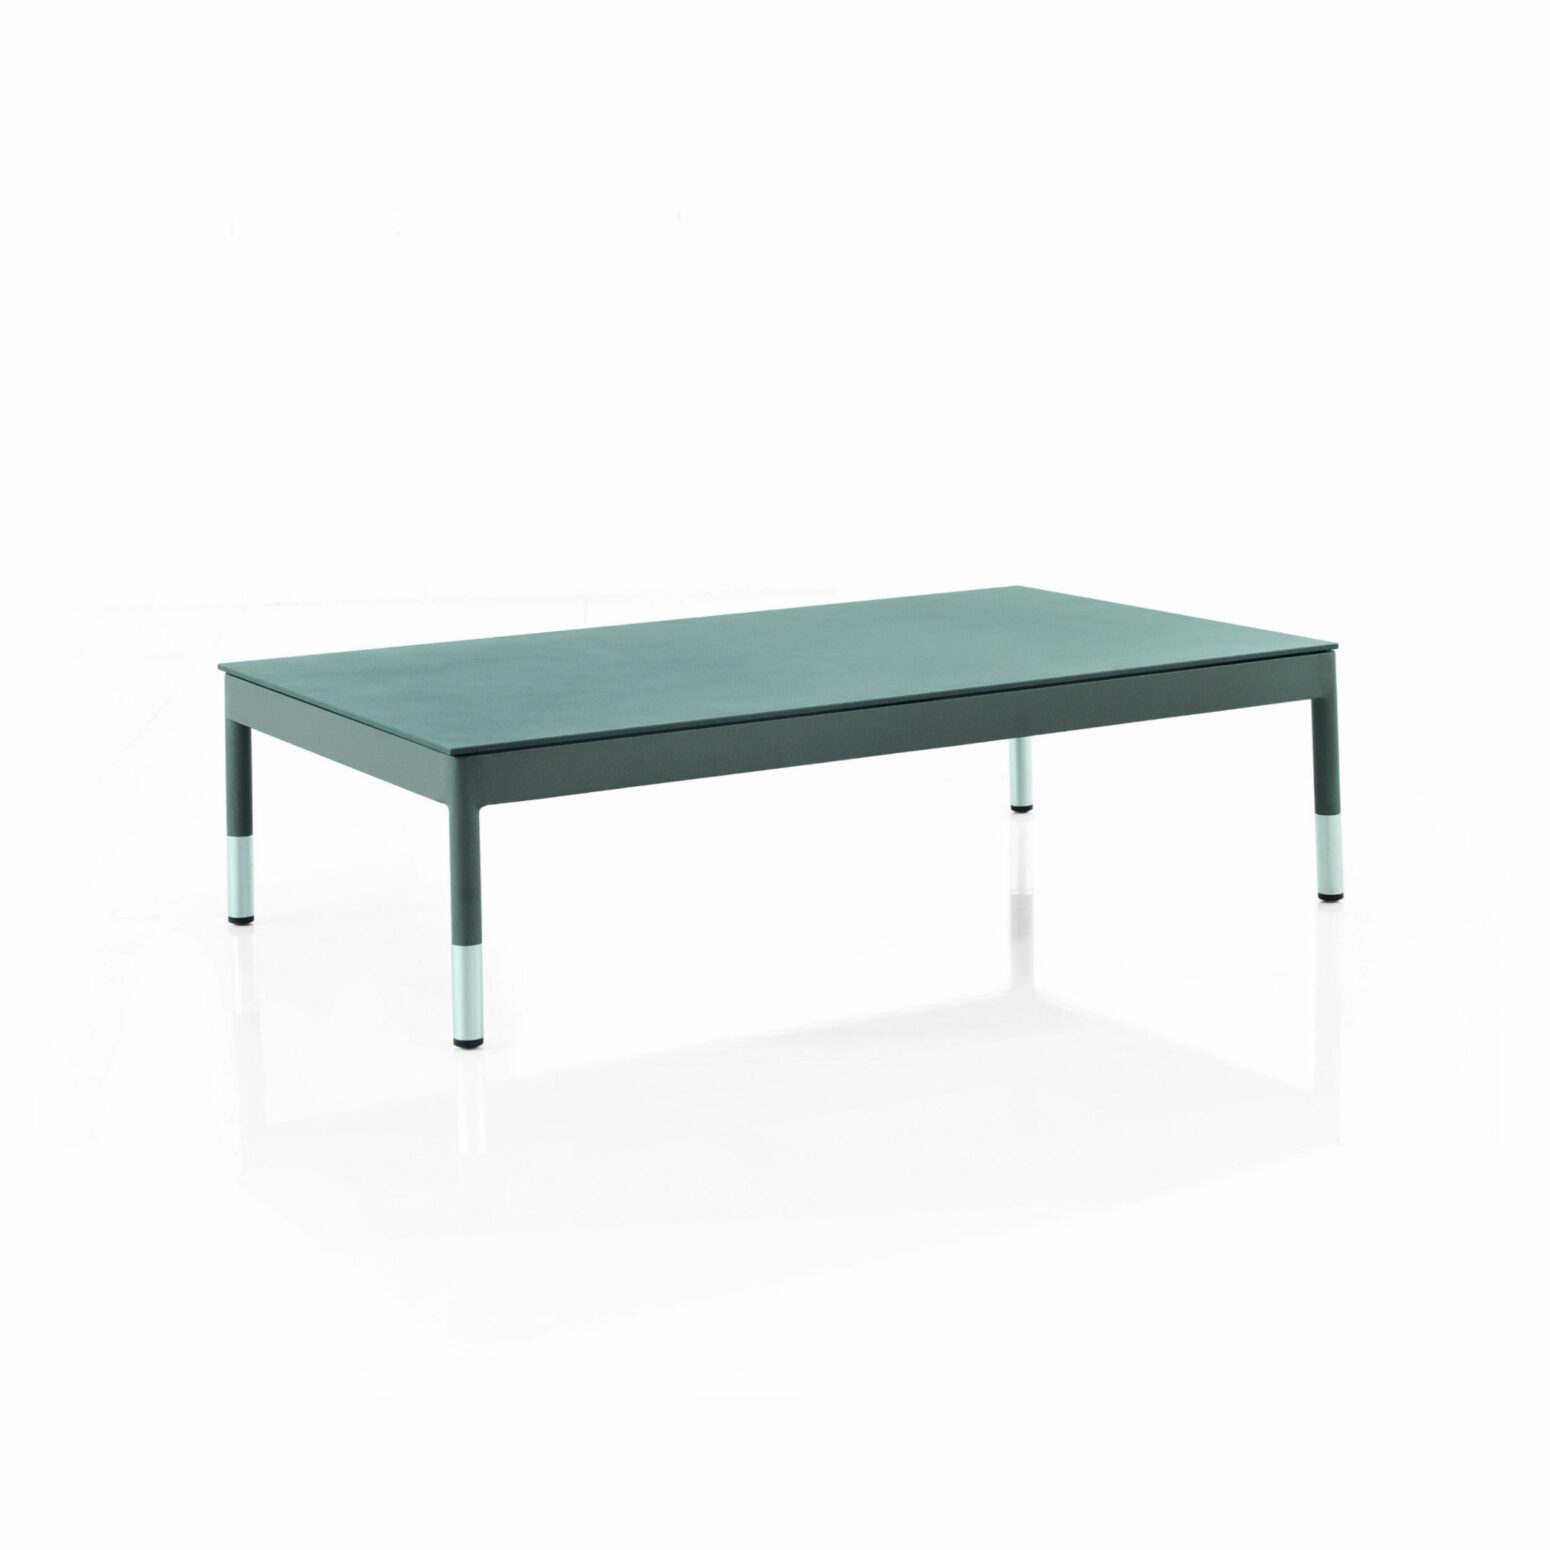 Table basse aluminium grise plateau verre